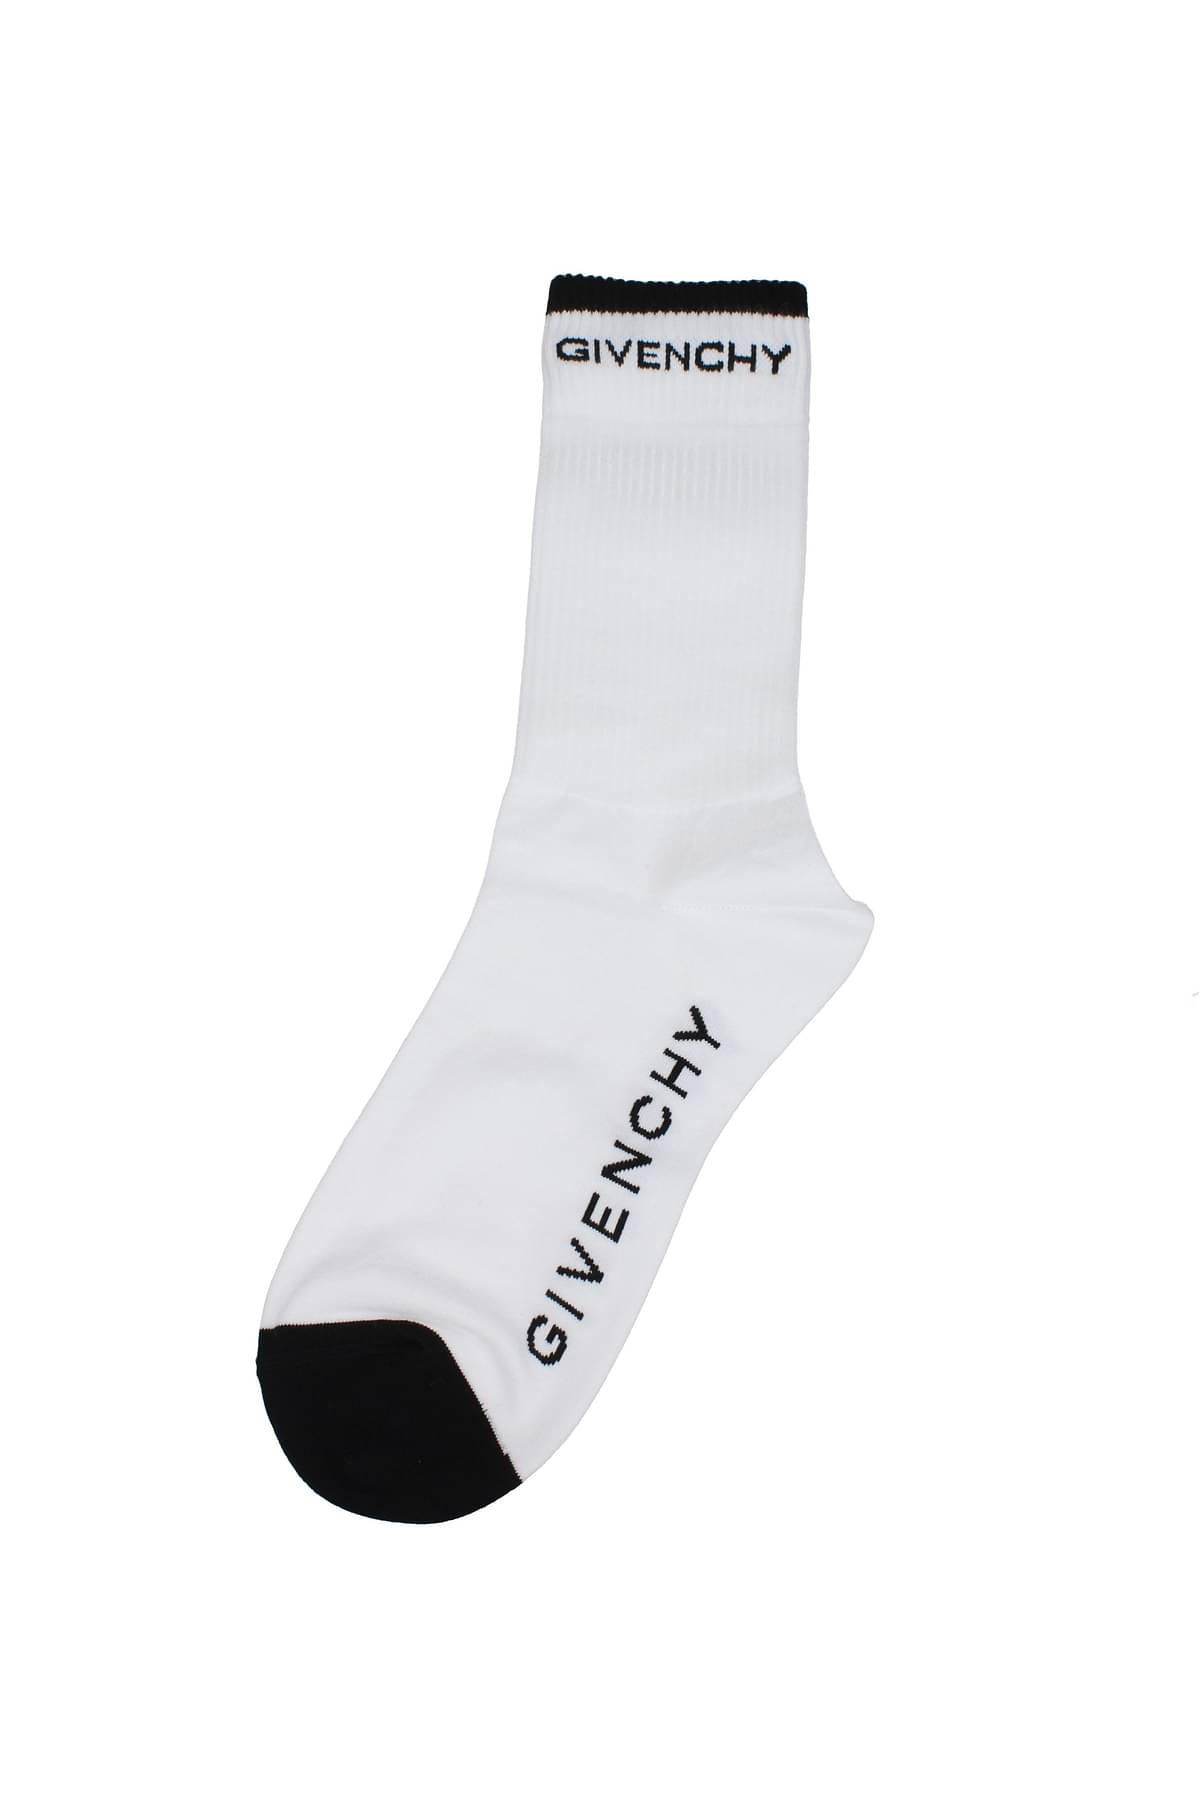 Givenchy Socks Men BMB02V4037116 Cotton 61,6€